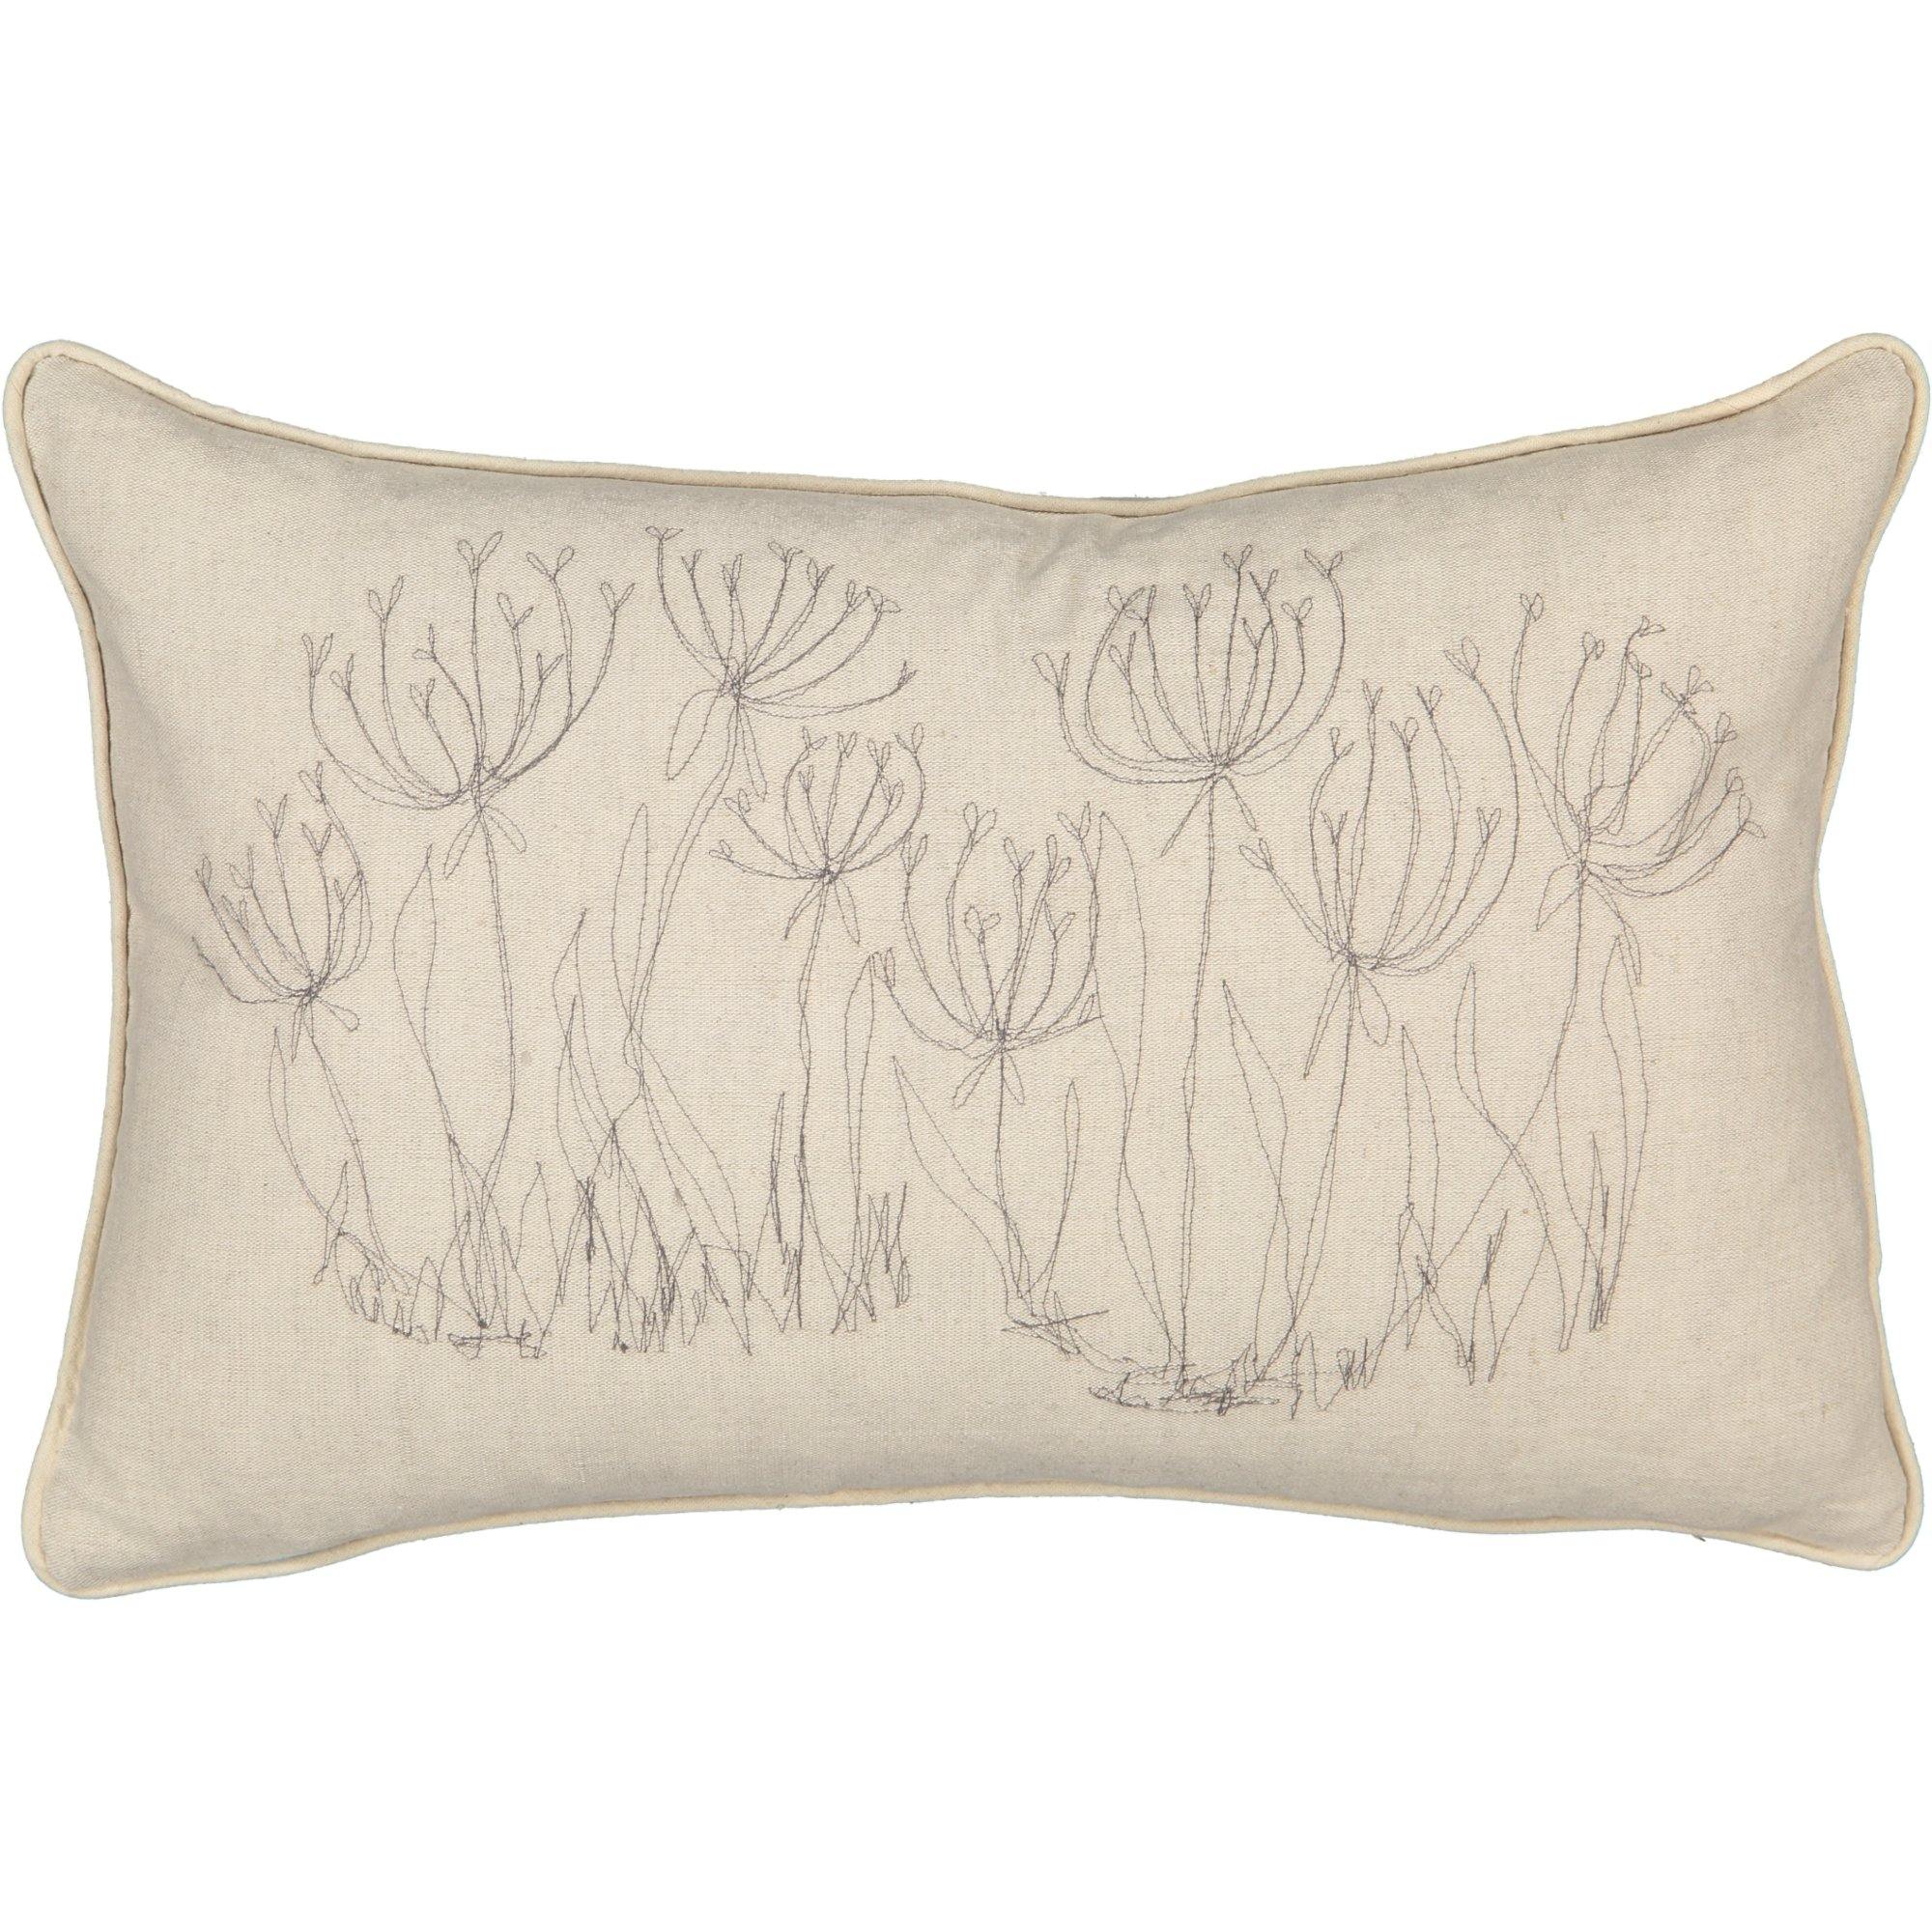 Fennel Flower Cushion Cover - threads that bind us